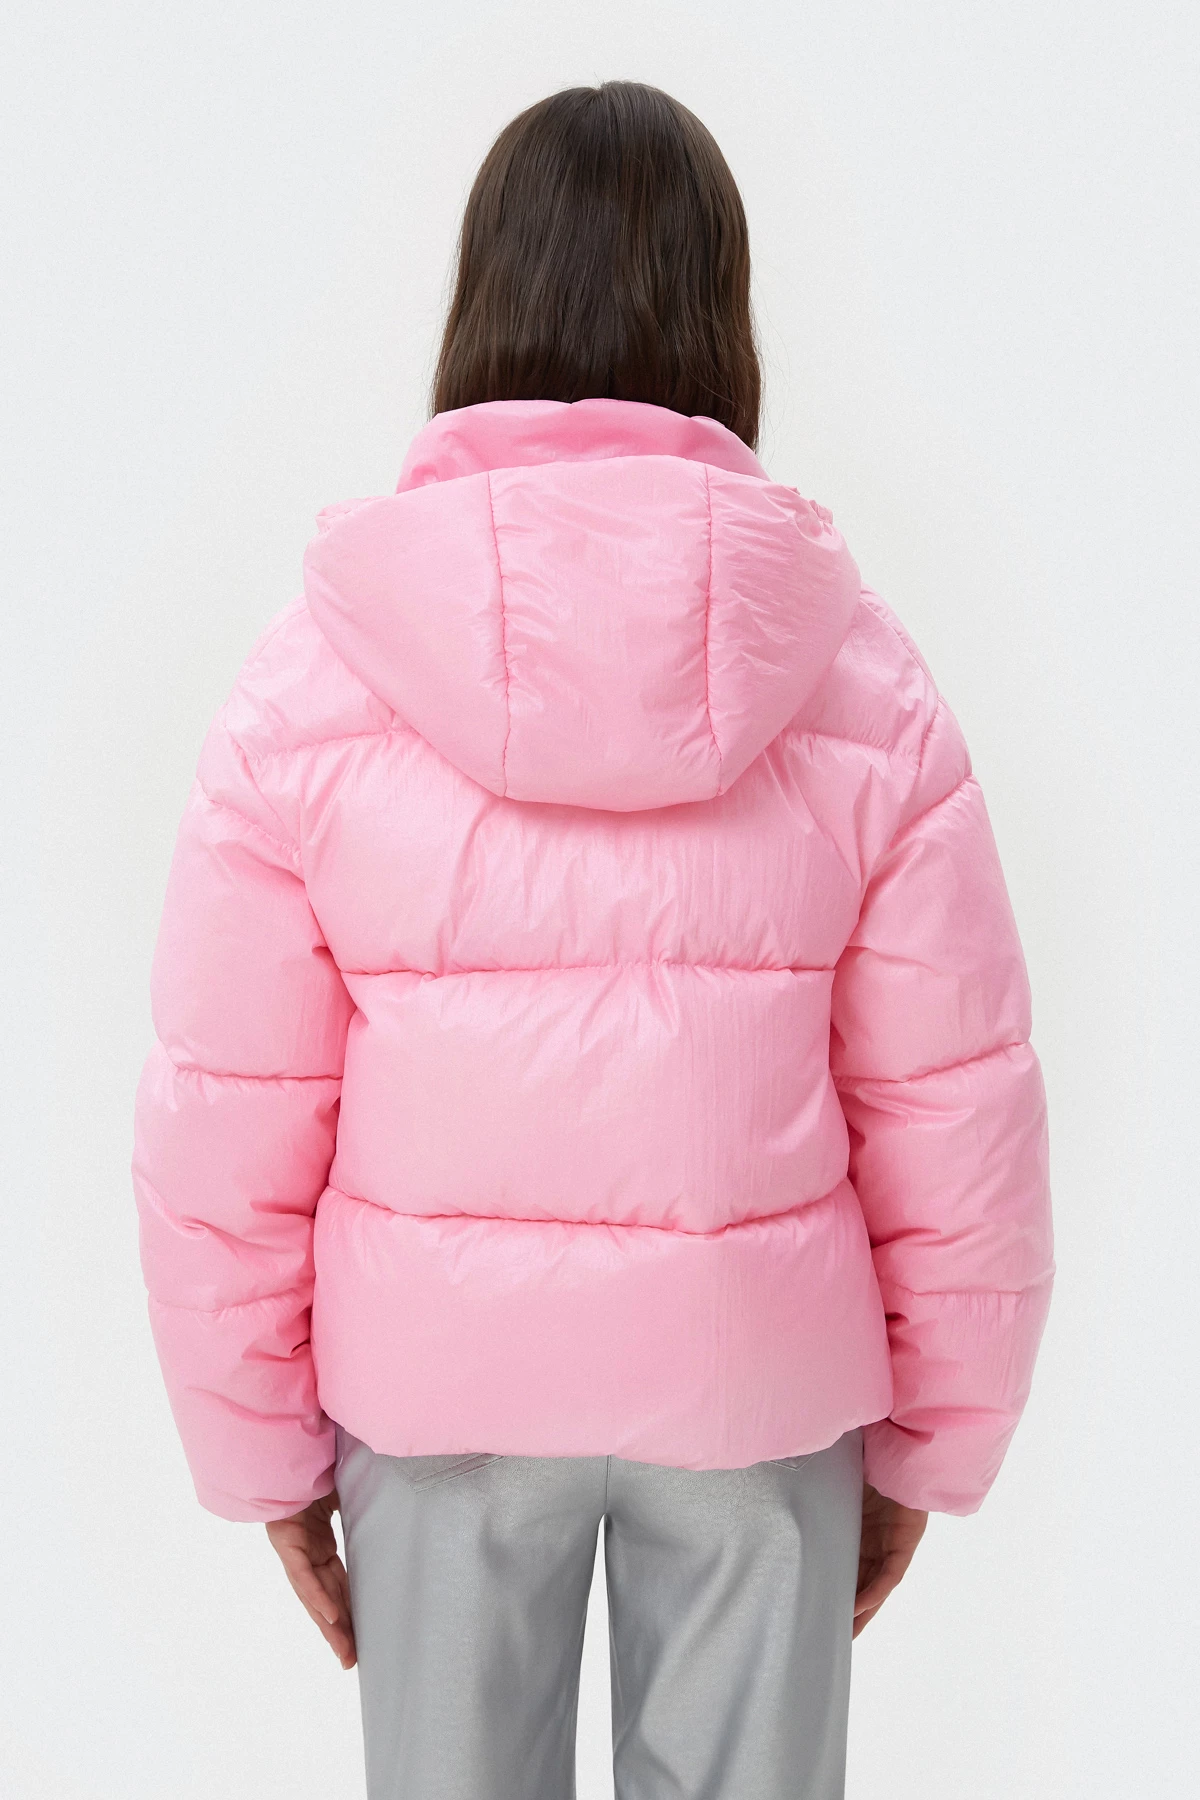 Soft pink cropped puffer jacket, photo 4